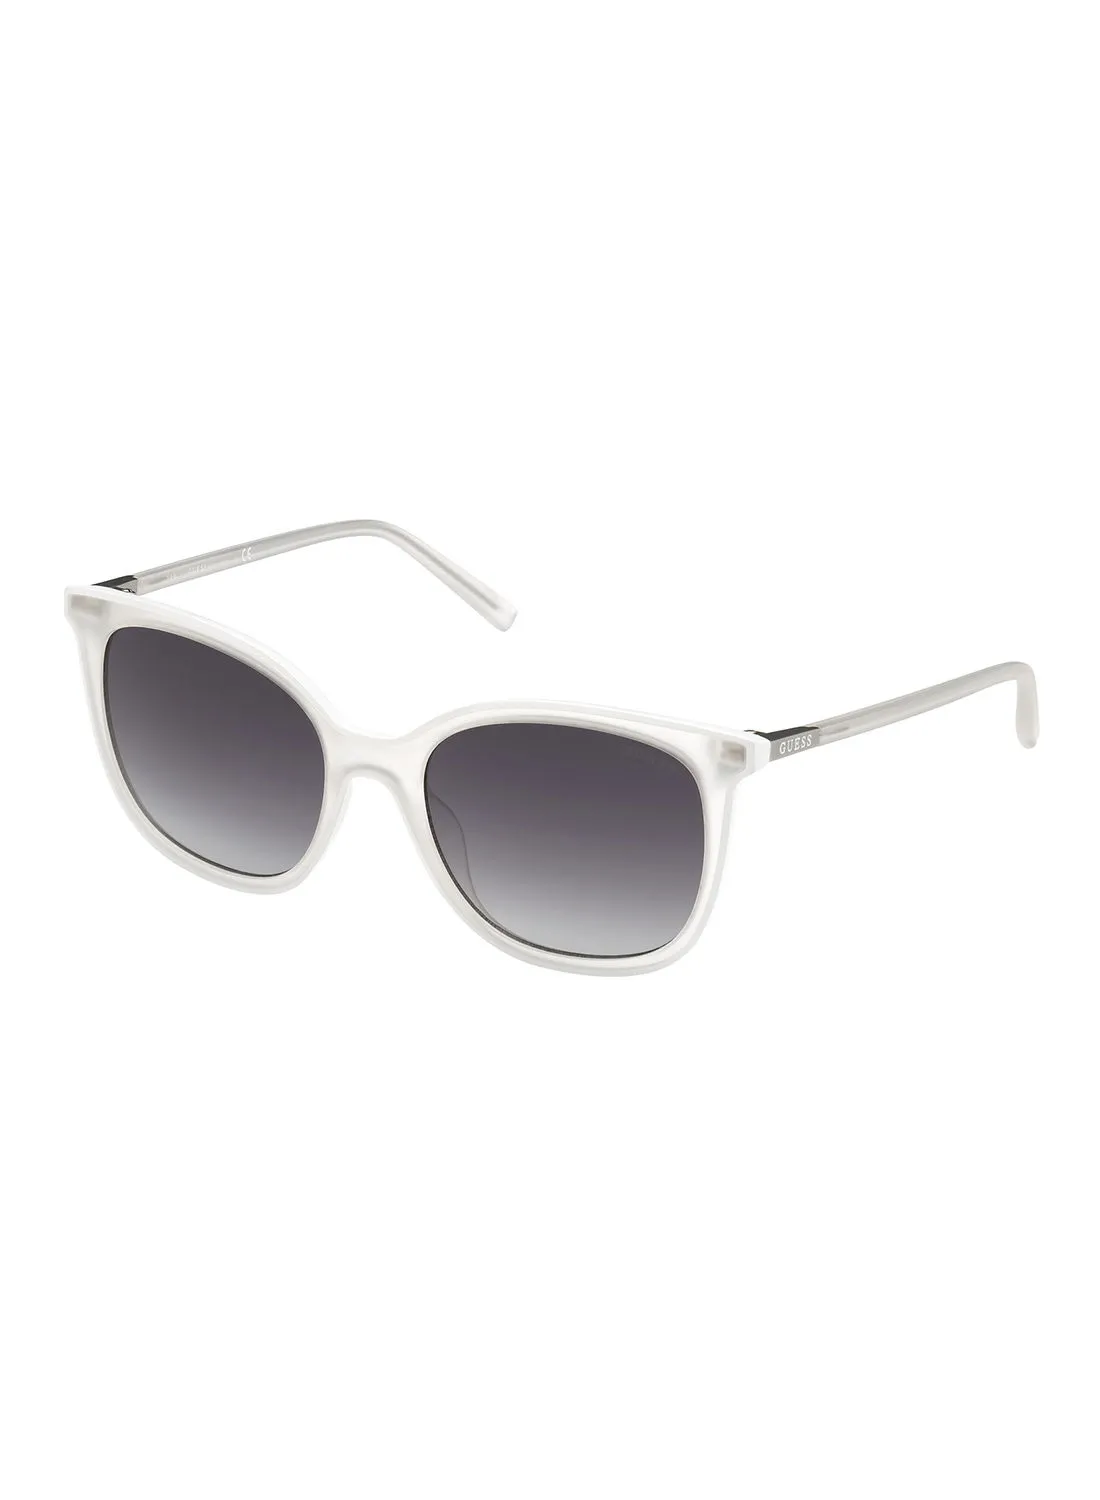 GUESS Women's Square Sunglasses - Lens Size: 55 mm